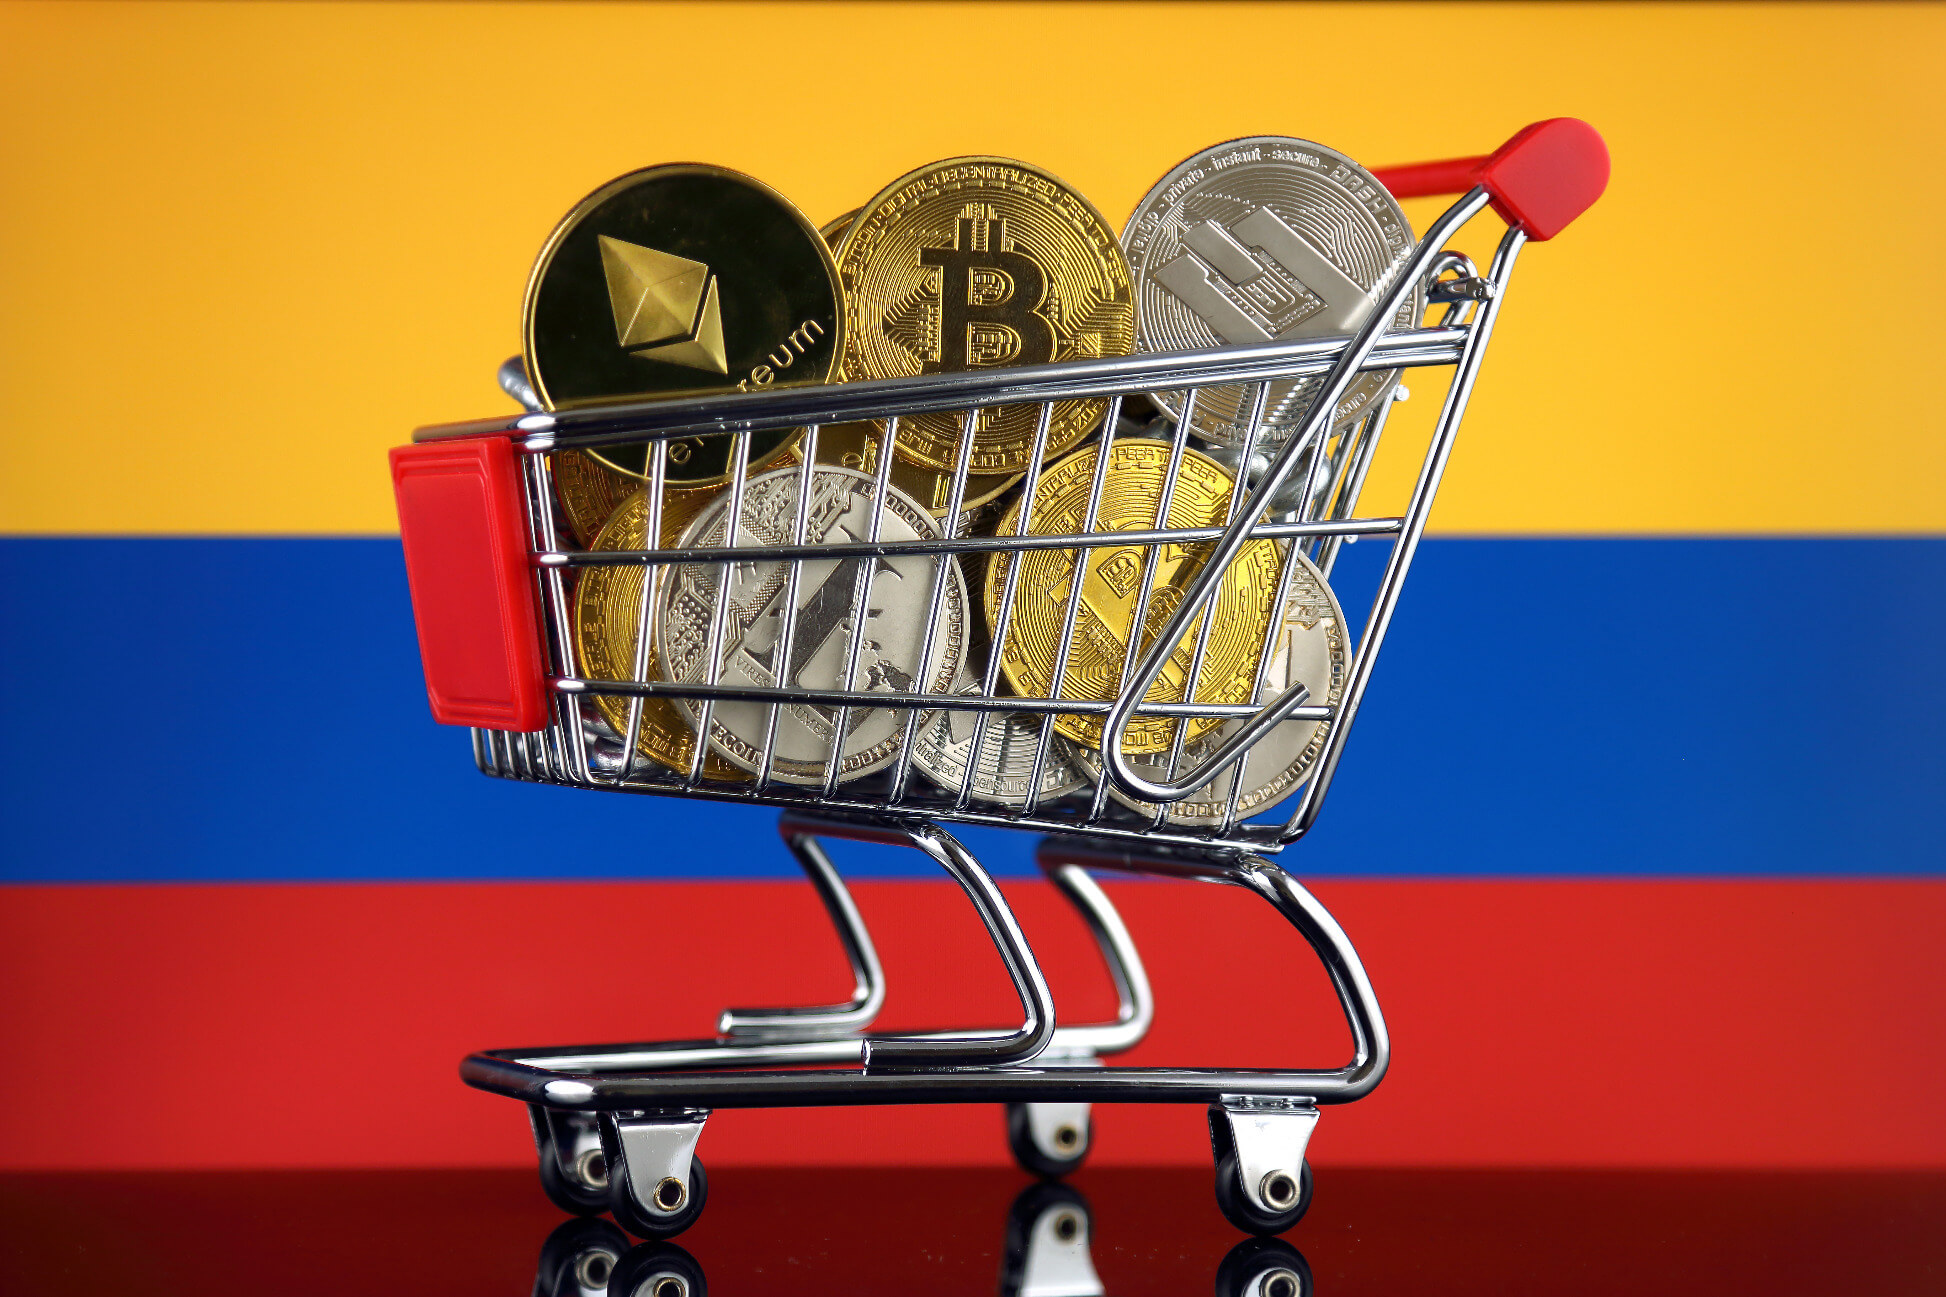 colombian crypto exchange